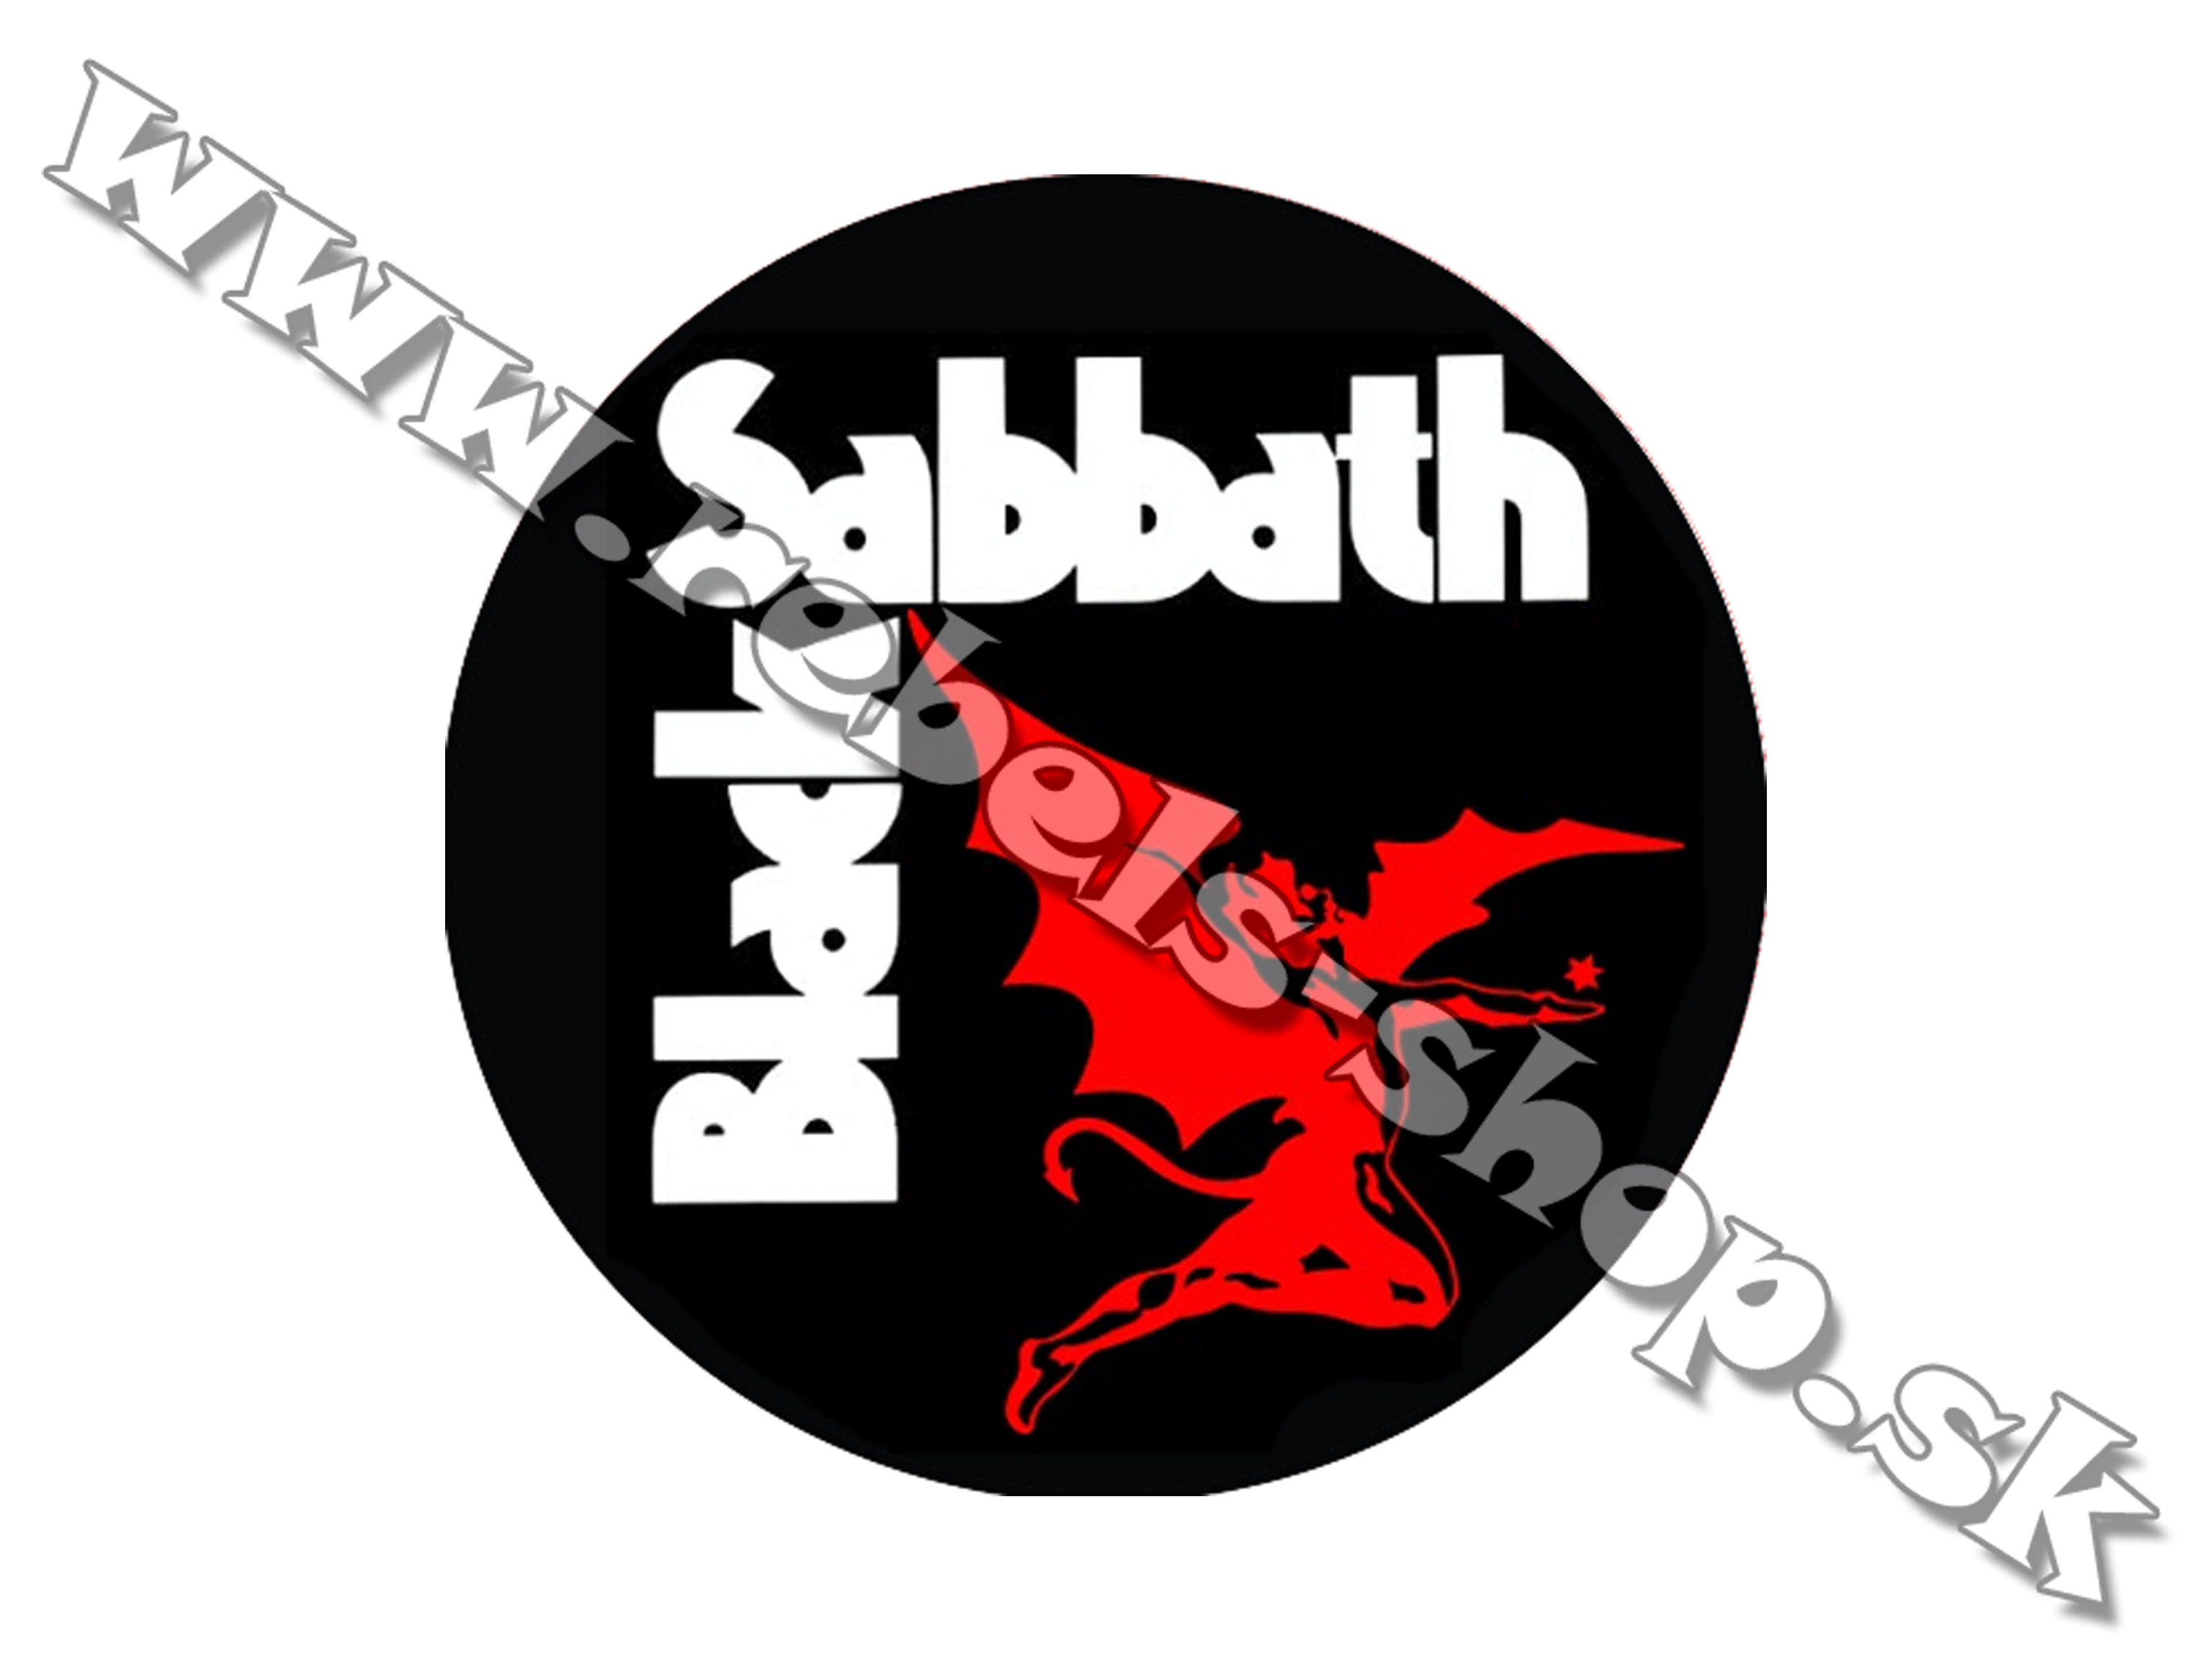 Odznak "Black Sabbath"